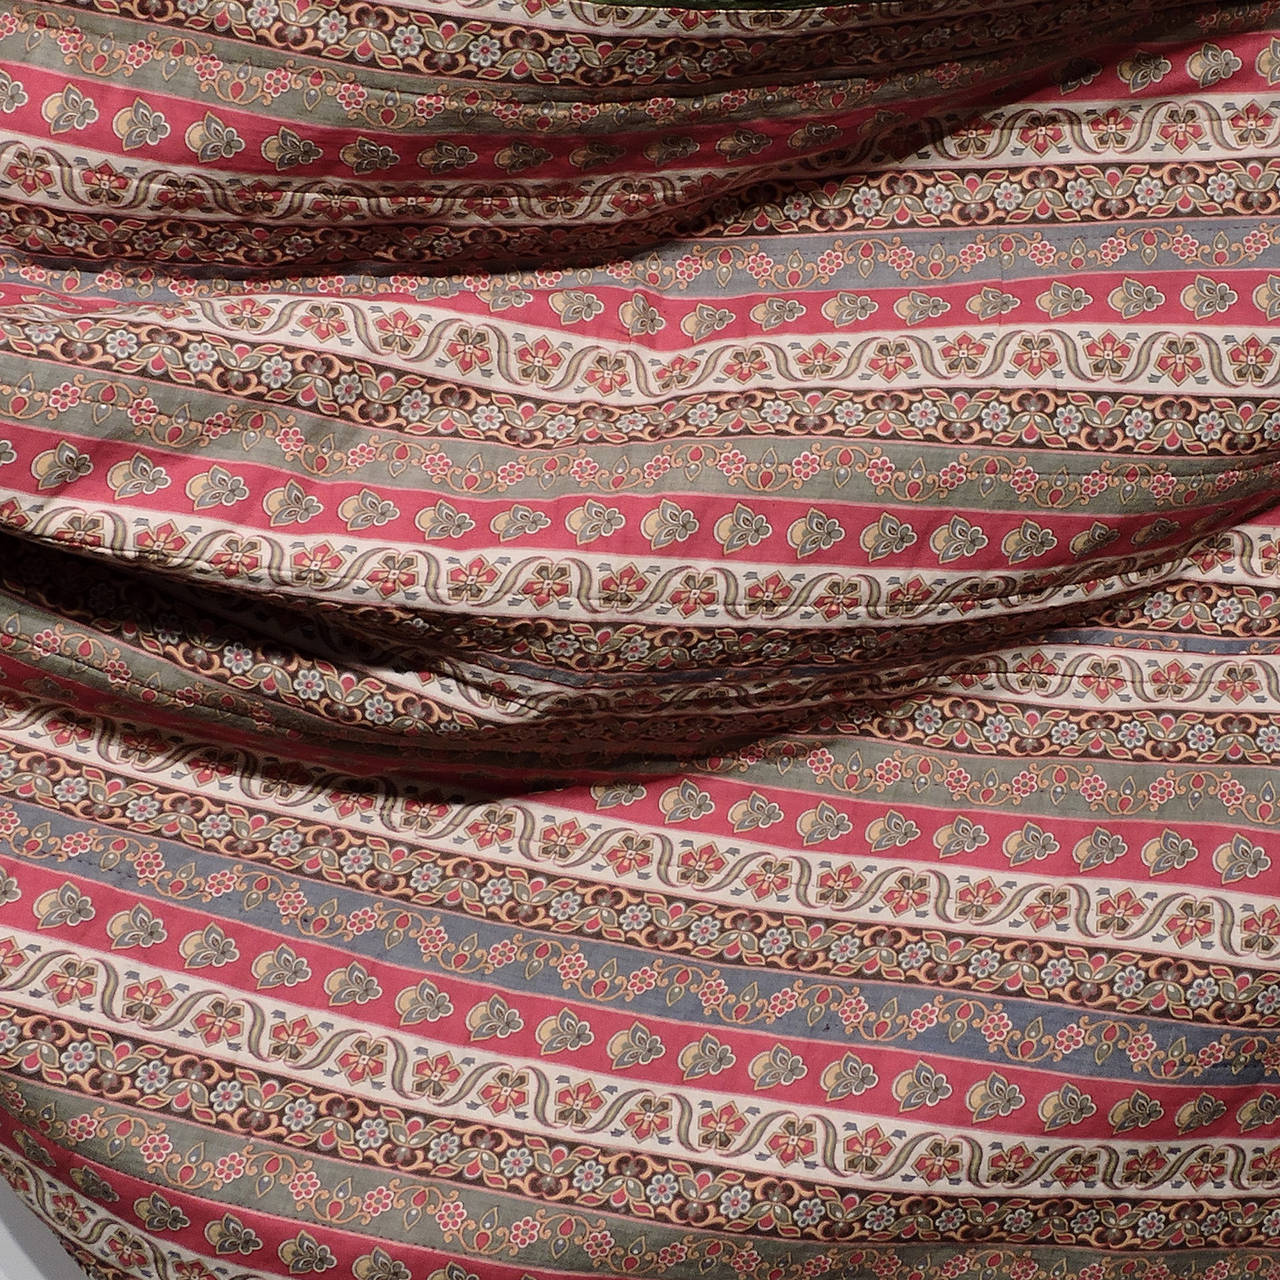 Tribal 19th Century Uzbek Silk Ikat Textile Panel